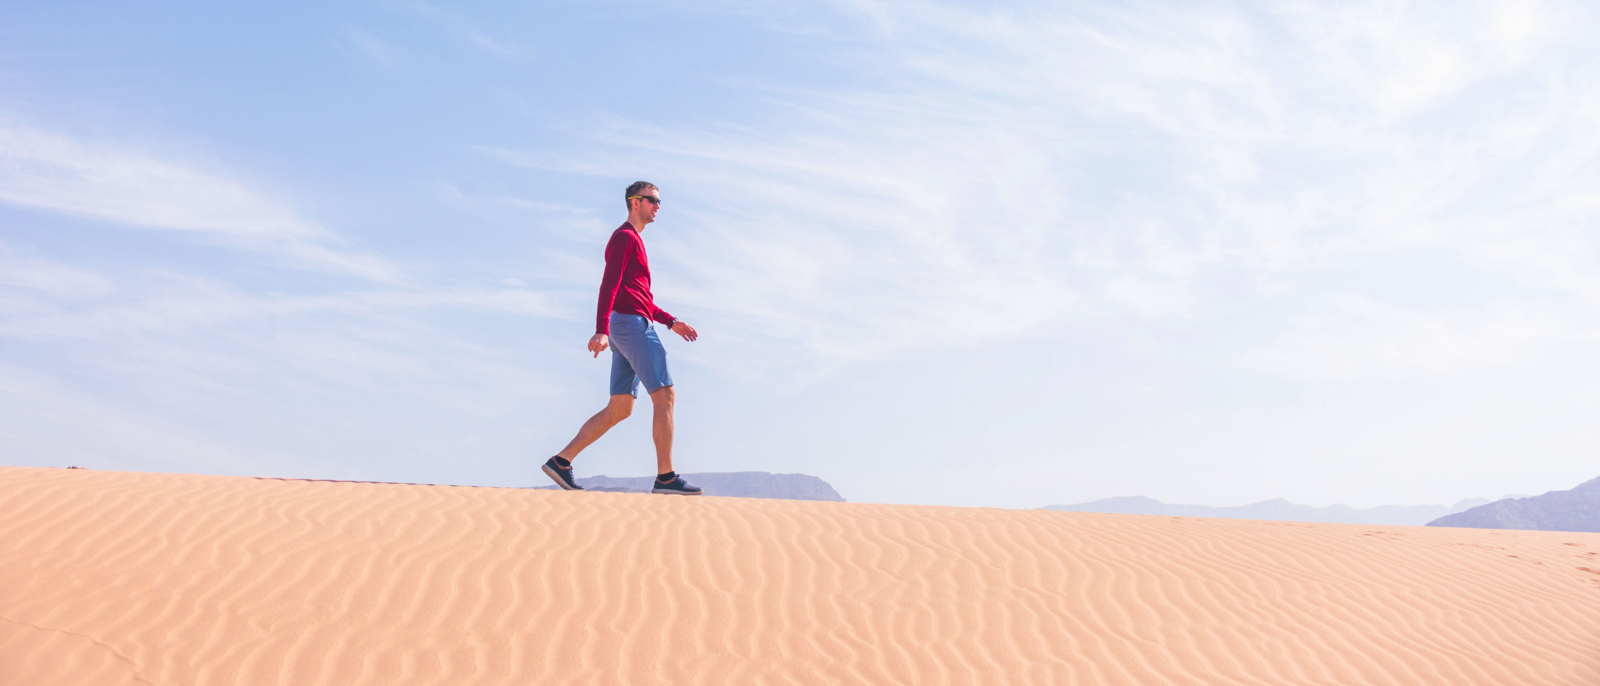 Tourist walks on the sand dune. Wadi Araba desert, Jordan landscape